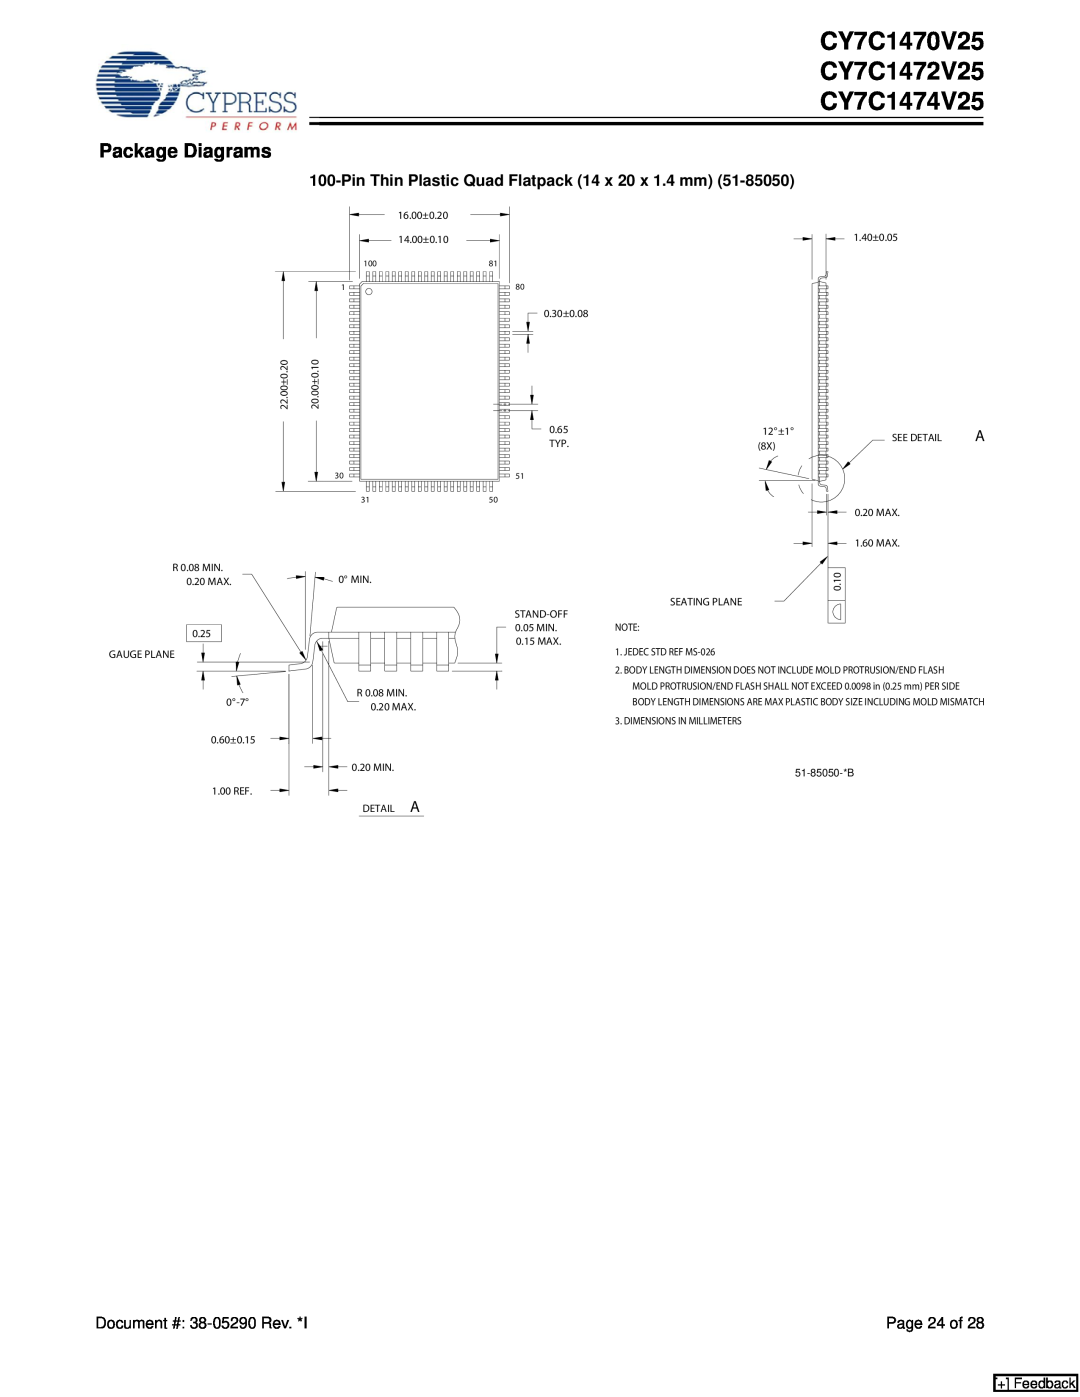 Cypress manual Package Diagrams, CY7C1470V25 CY7C1472V25 CY7C1474V25, Pin Thin Plastic Quad Flatpack 14 x 20 x 1.4 mm 